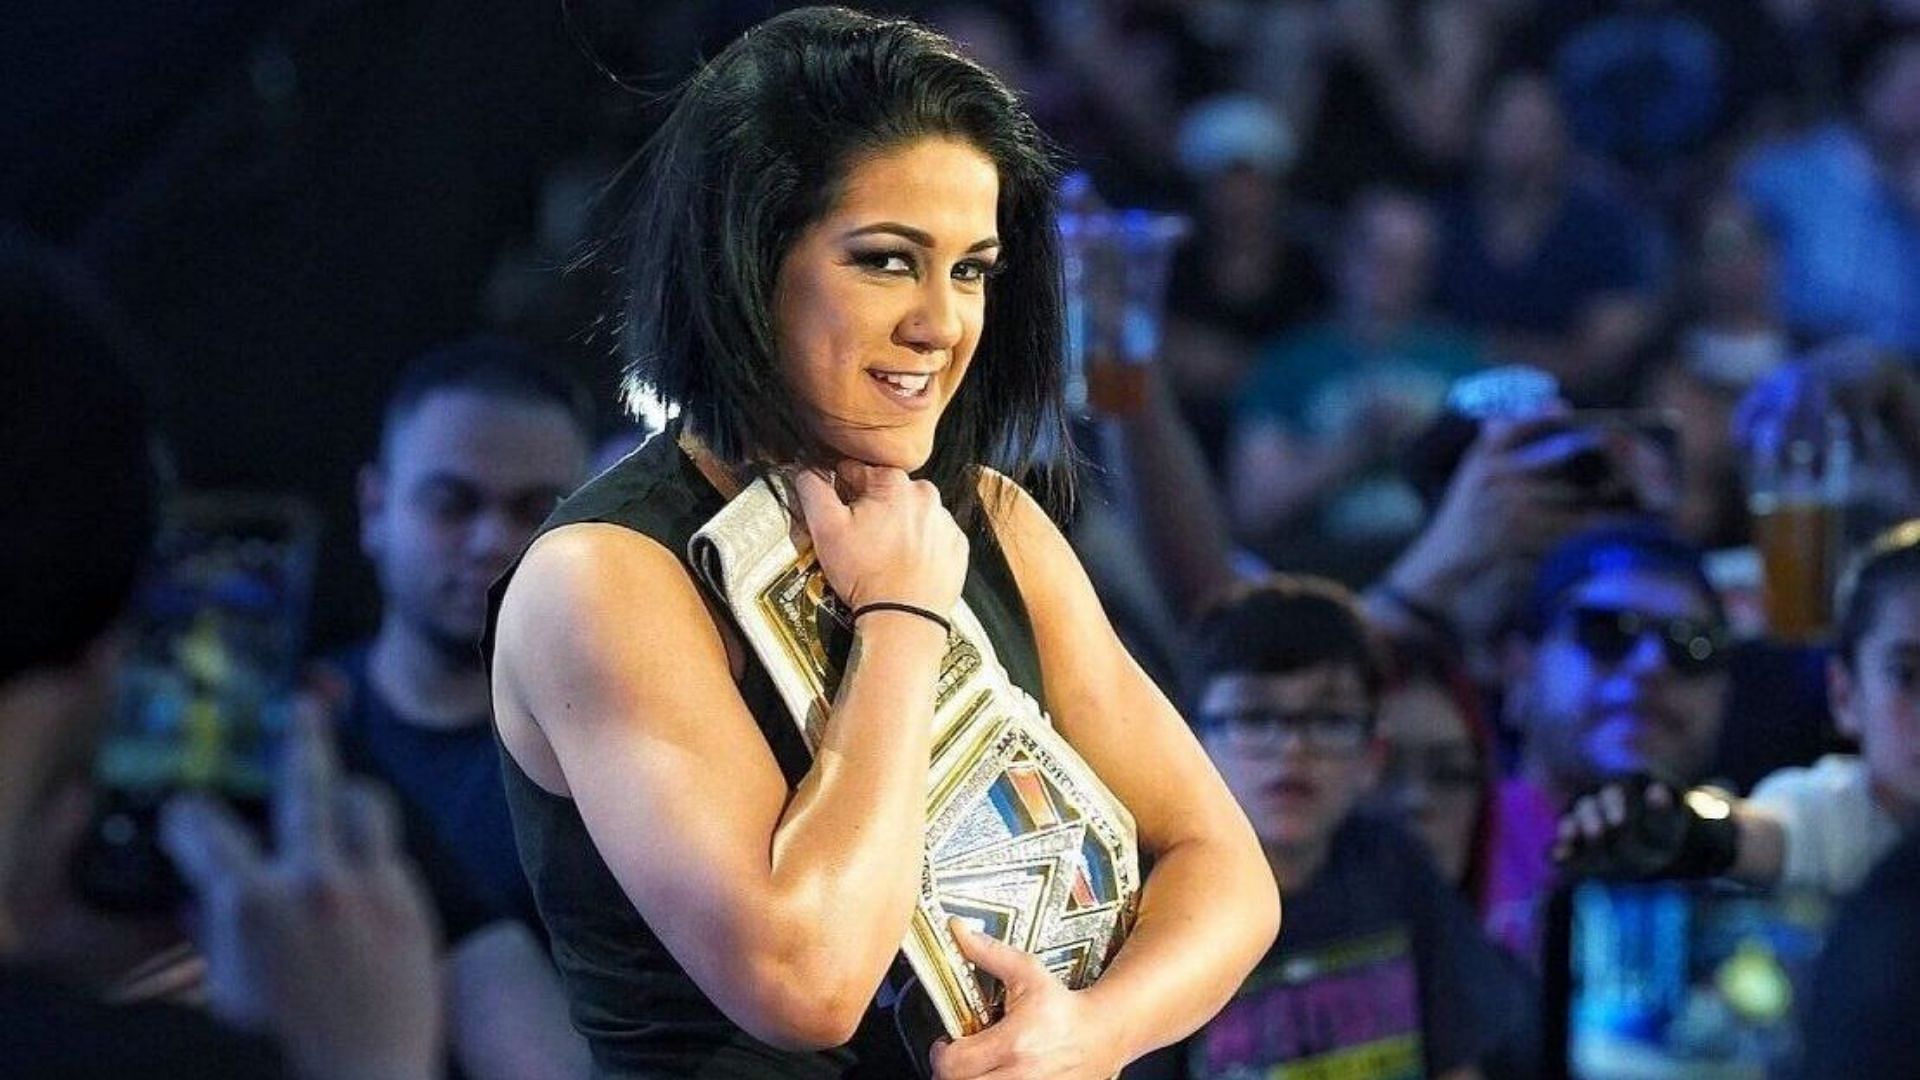 Bayley is a former WWE SmackDown Women